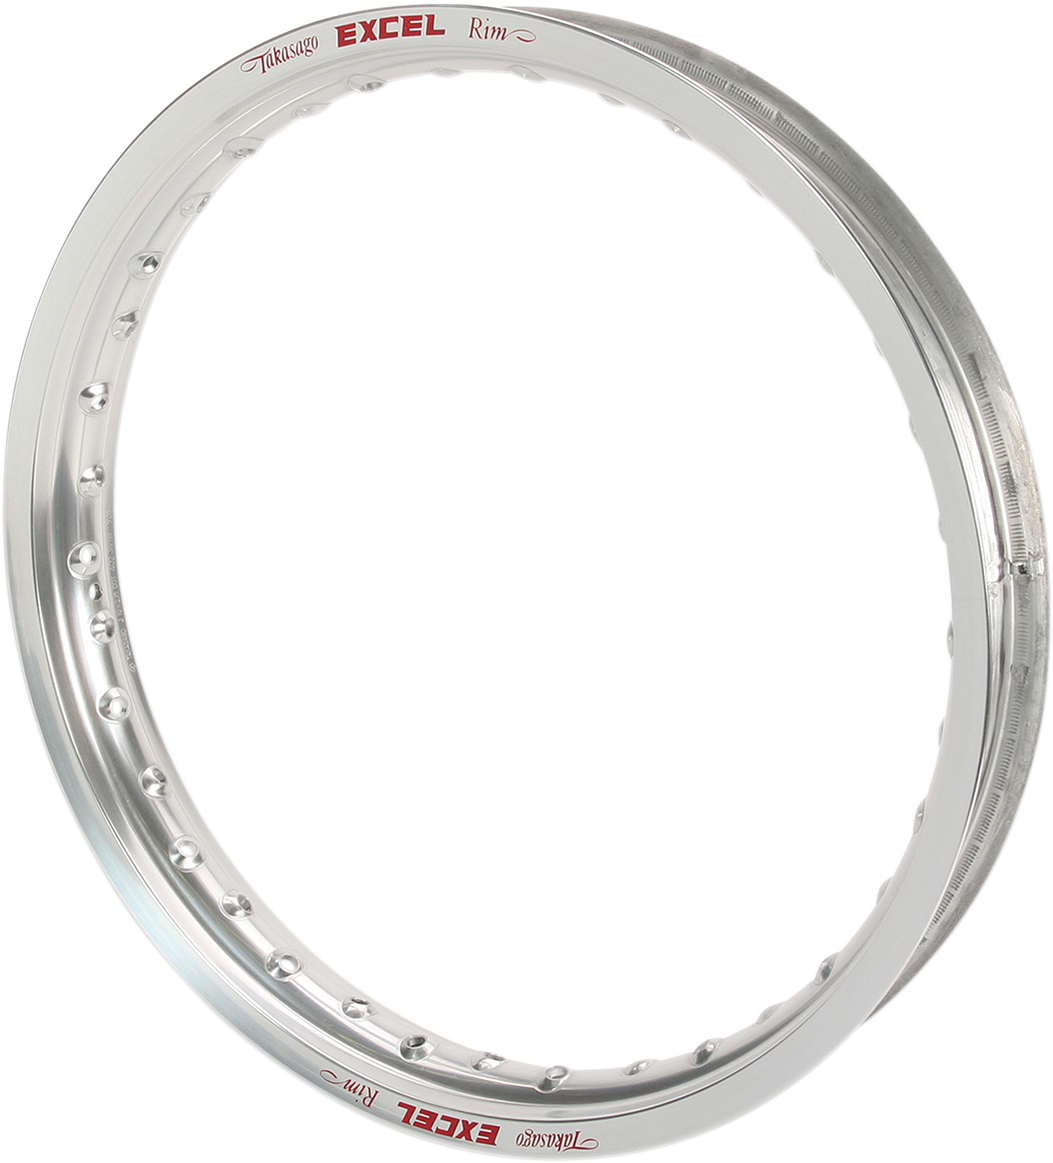 EXCEL Rim - Rear - Silver - 19" x 2.15" - 36 Hole GES422